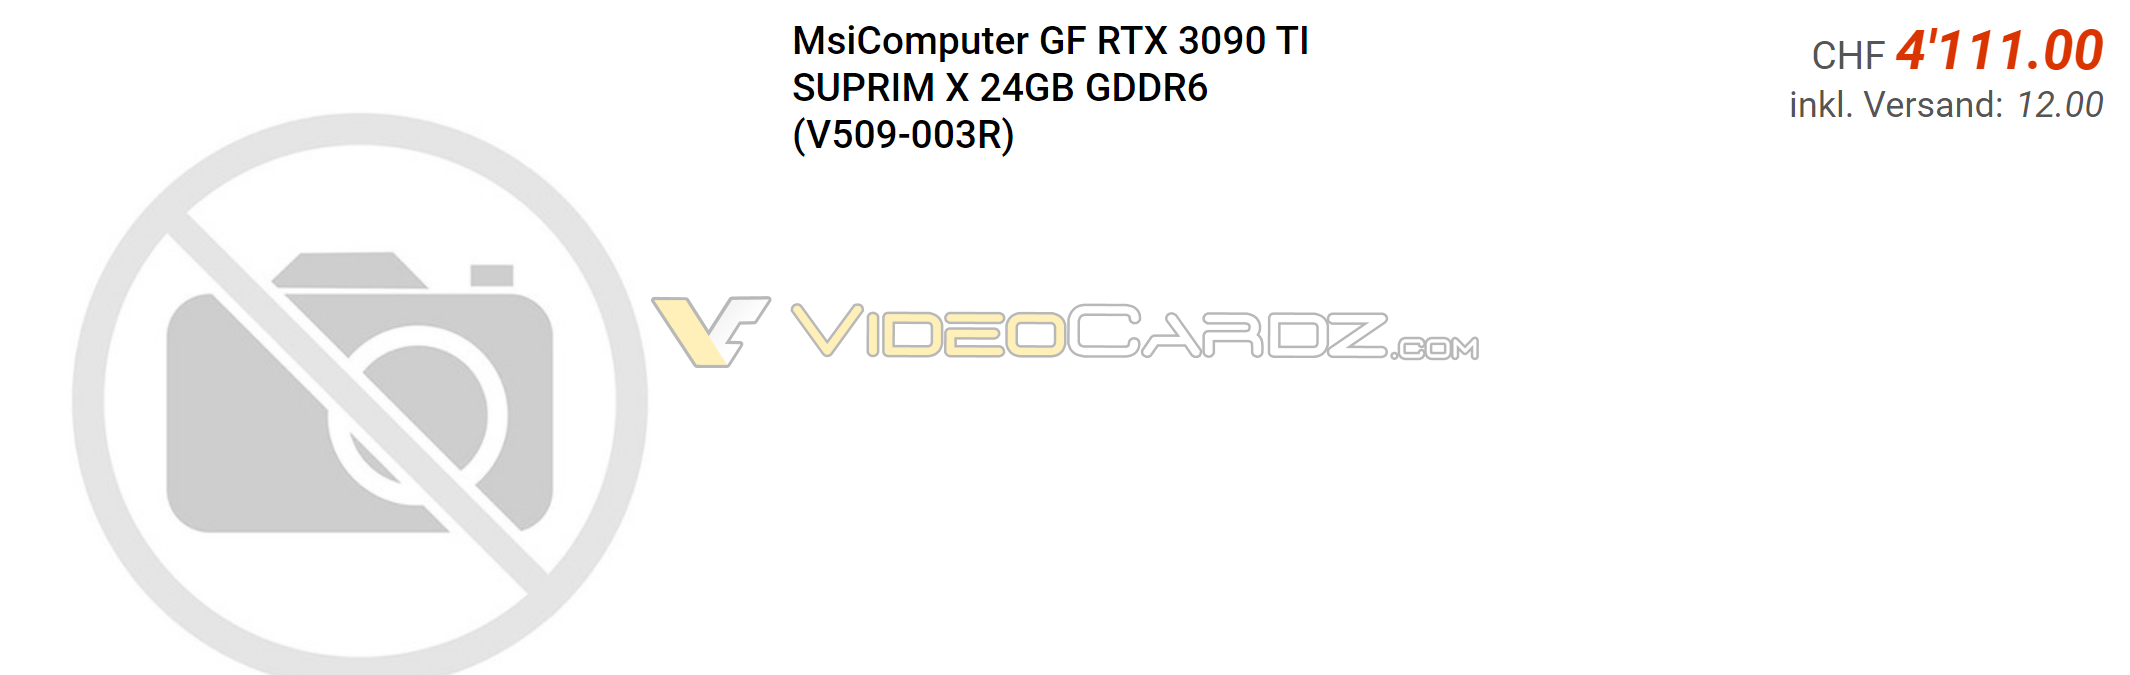 NVIDIA GeForce RTX-3090 Ti Pricing